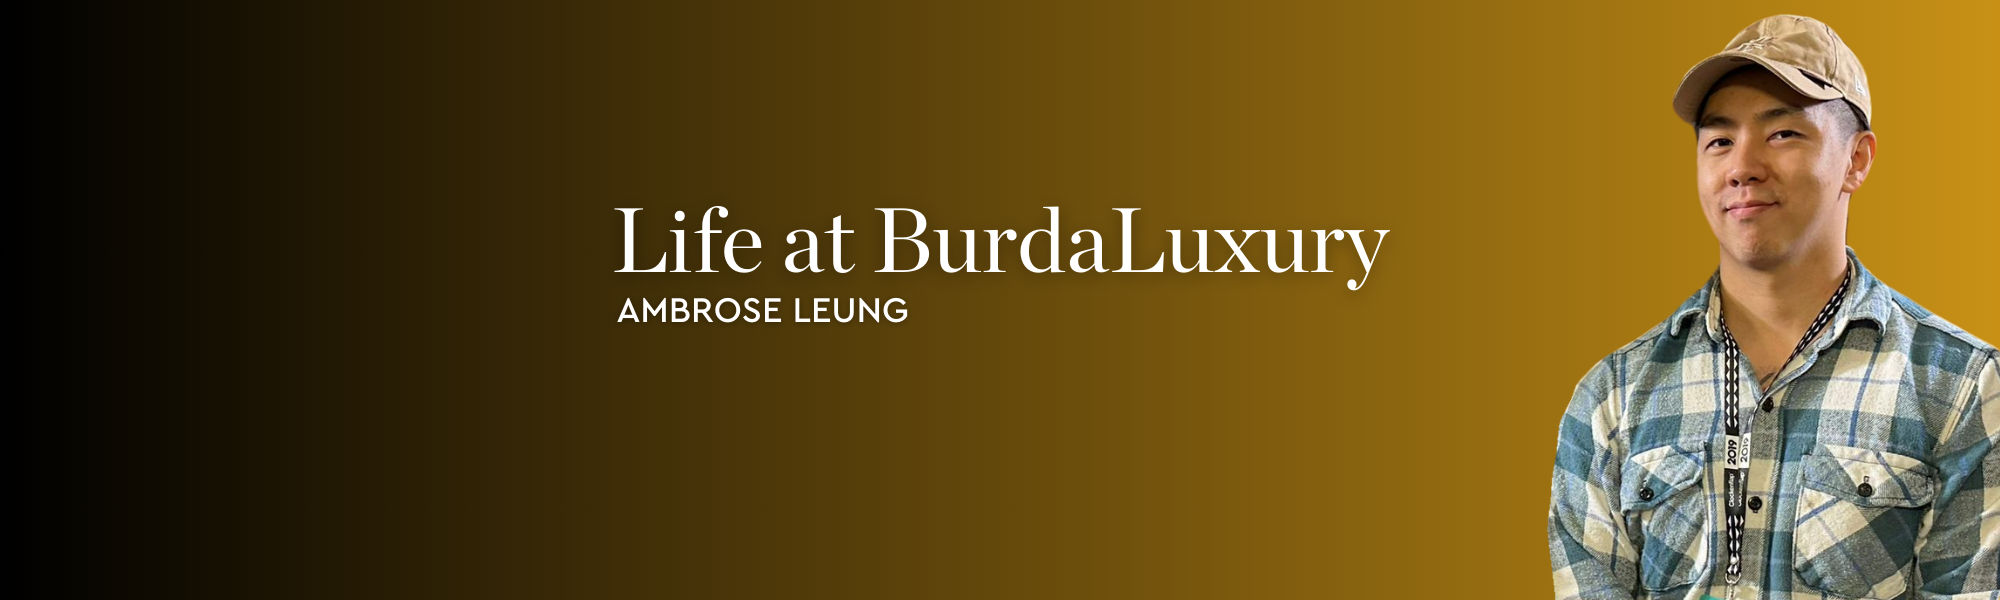 Life at BurdaLuxury - Ambrose Leung